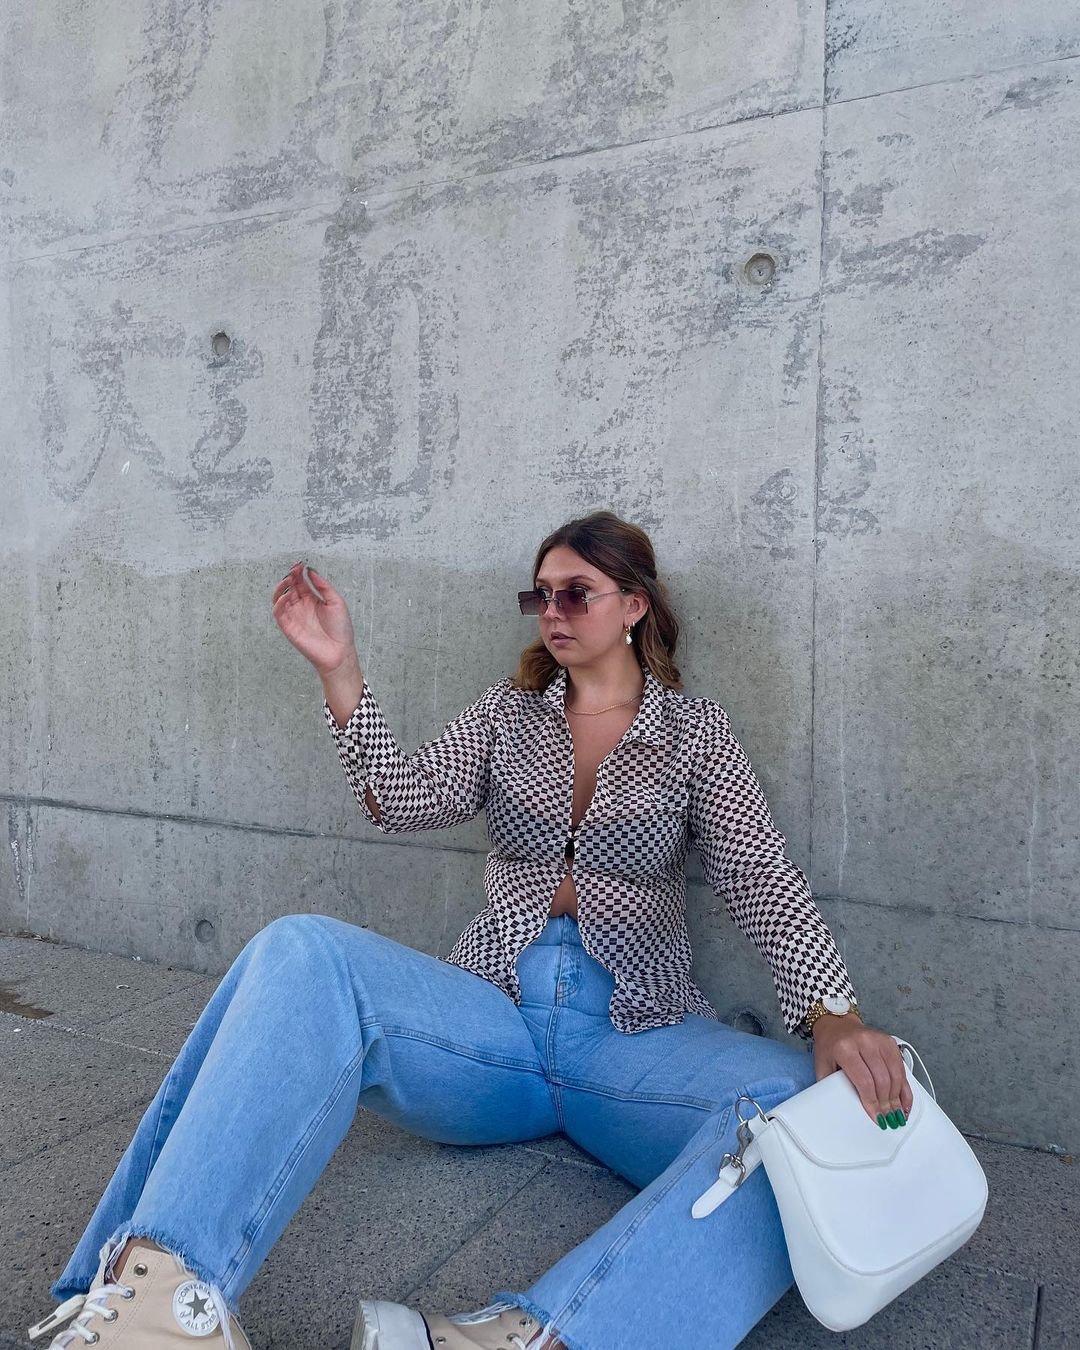 It girls - blusas tendência, camisa transparente, calça jeans, transparência - blusas tendência - Inverno - Street Style  - https://stealthelook.com.br